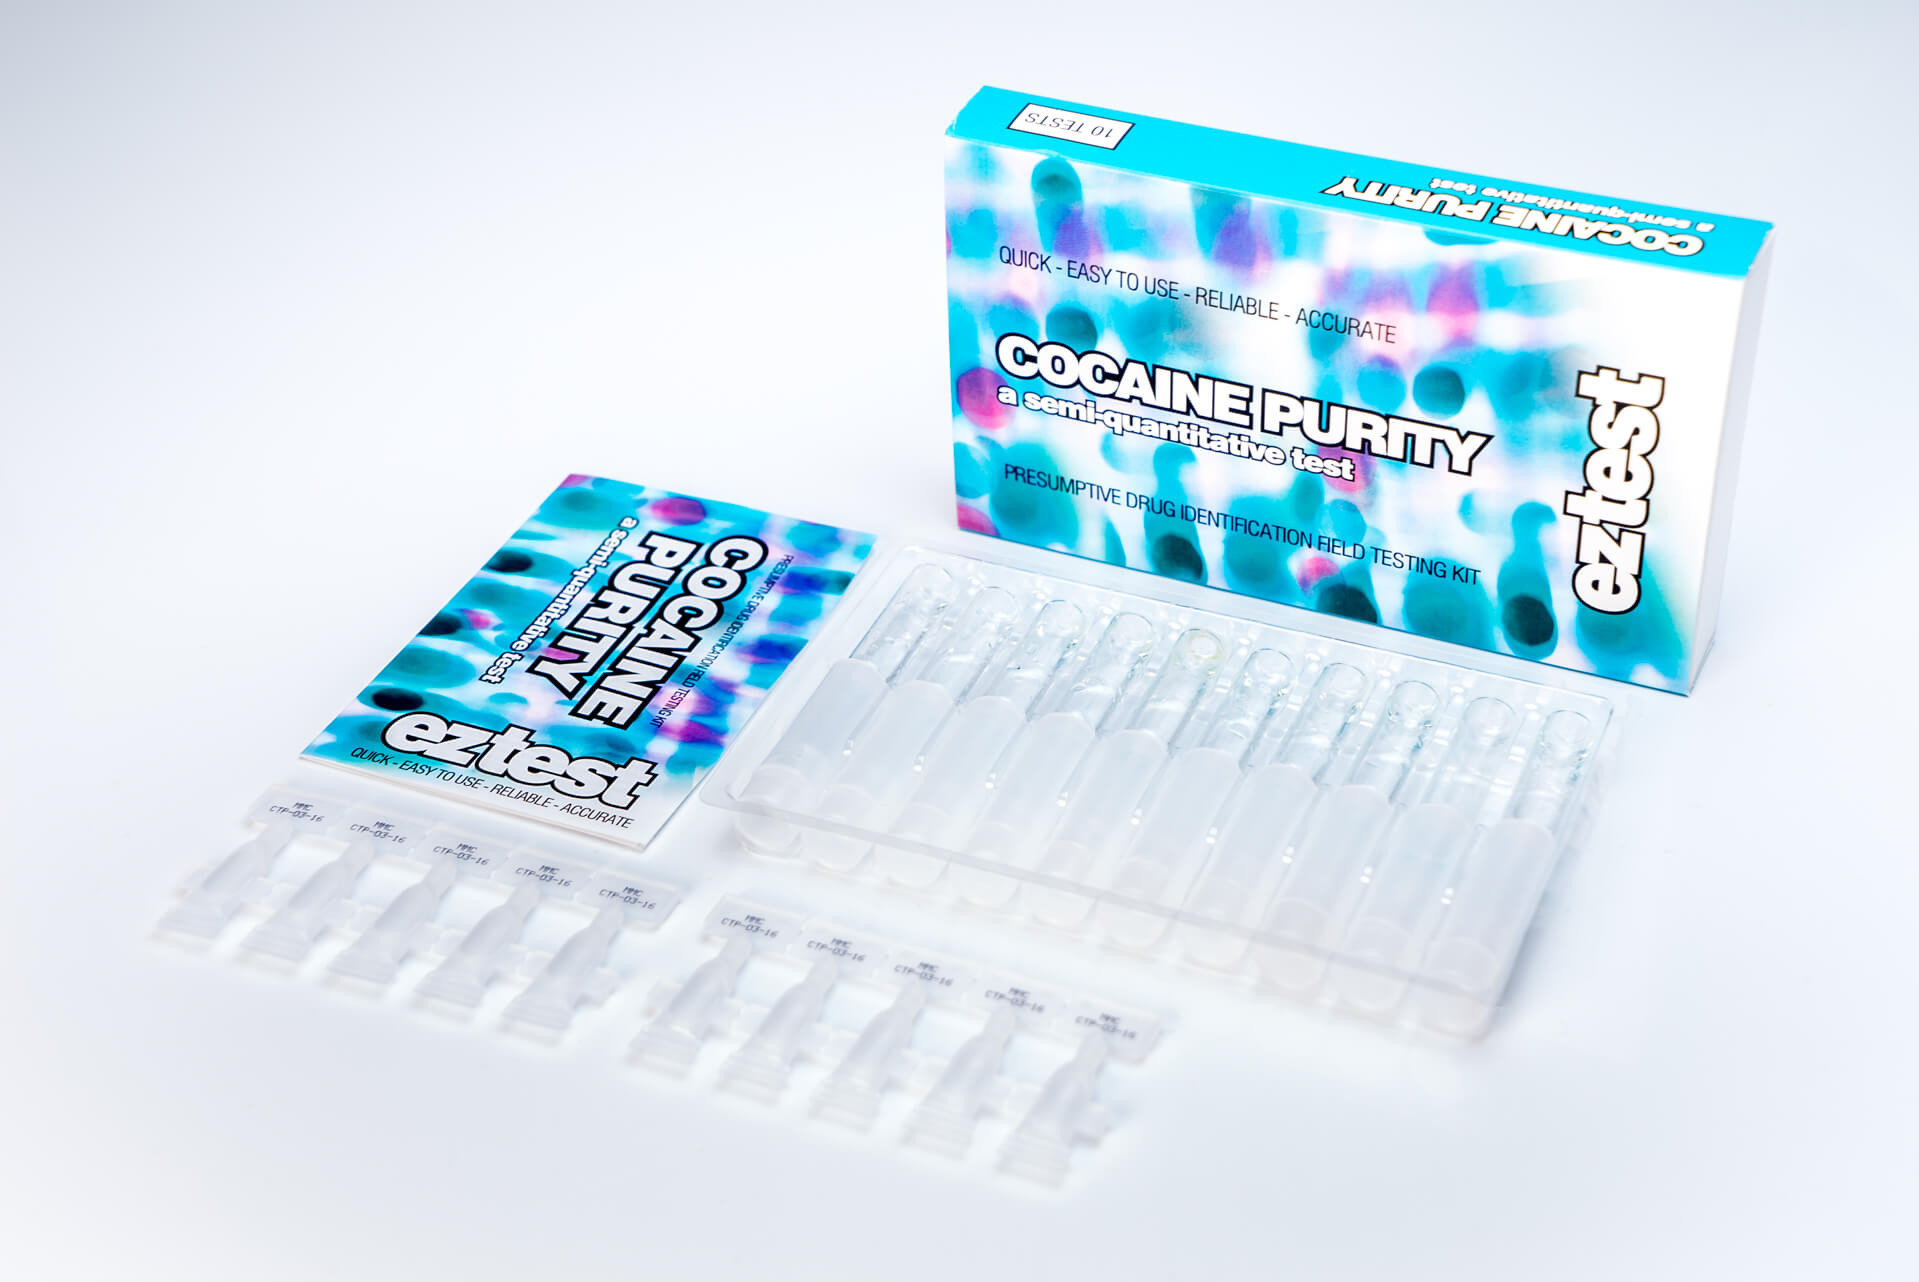 Cocaine Purity 10 Use Drug Testing Kit